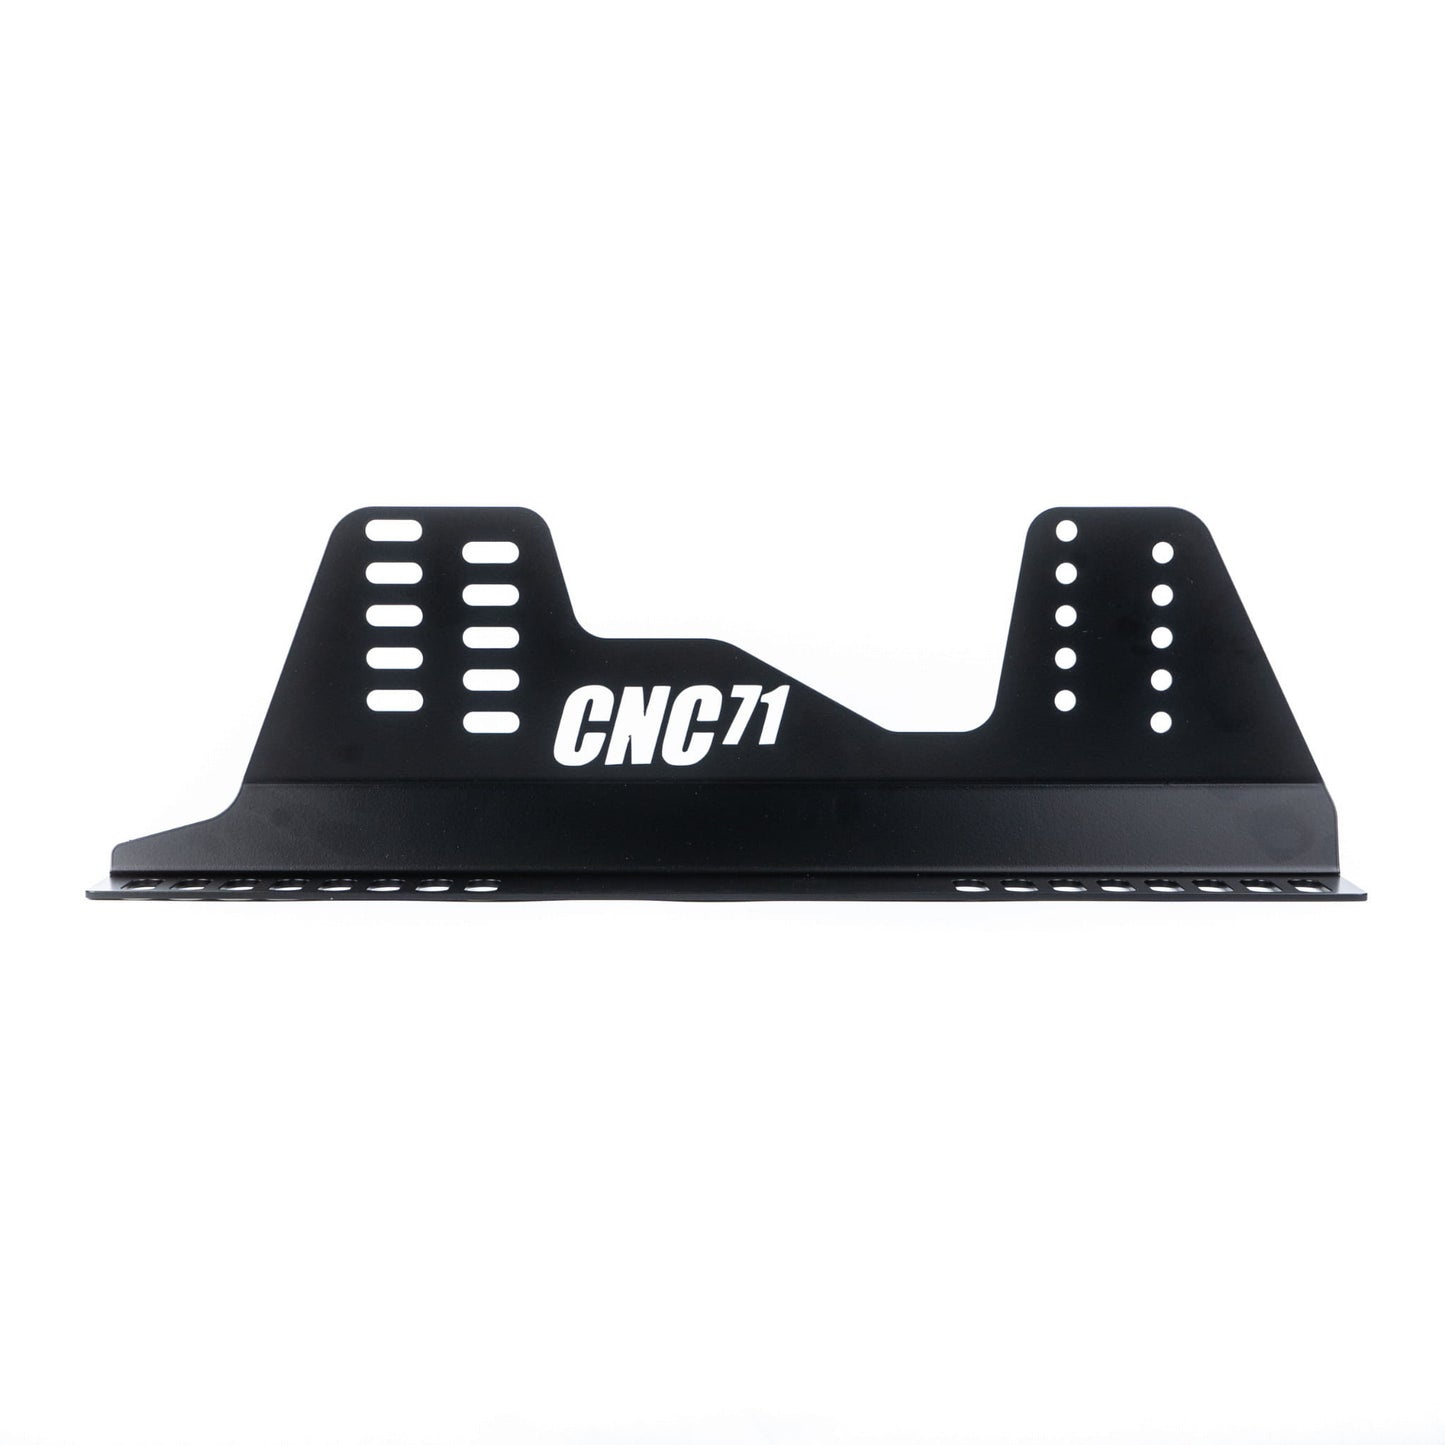 CNC71 - RACING BUCKET SEAT MOUNT BMW E46 (SIDE)